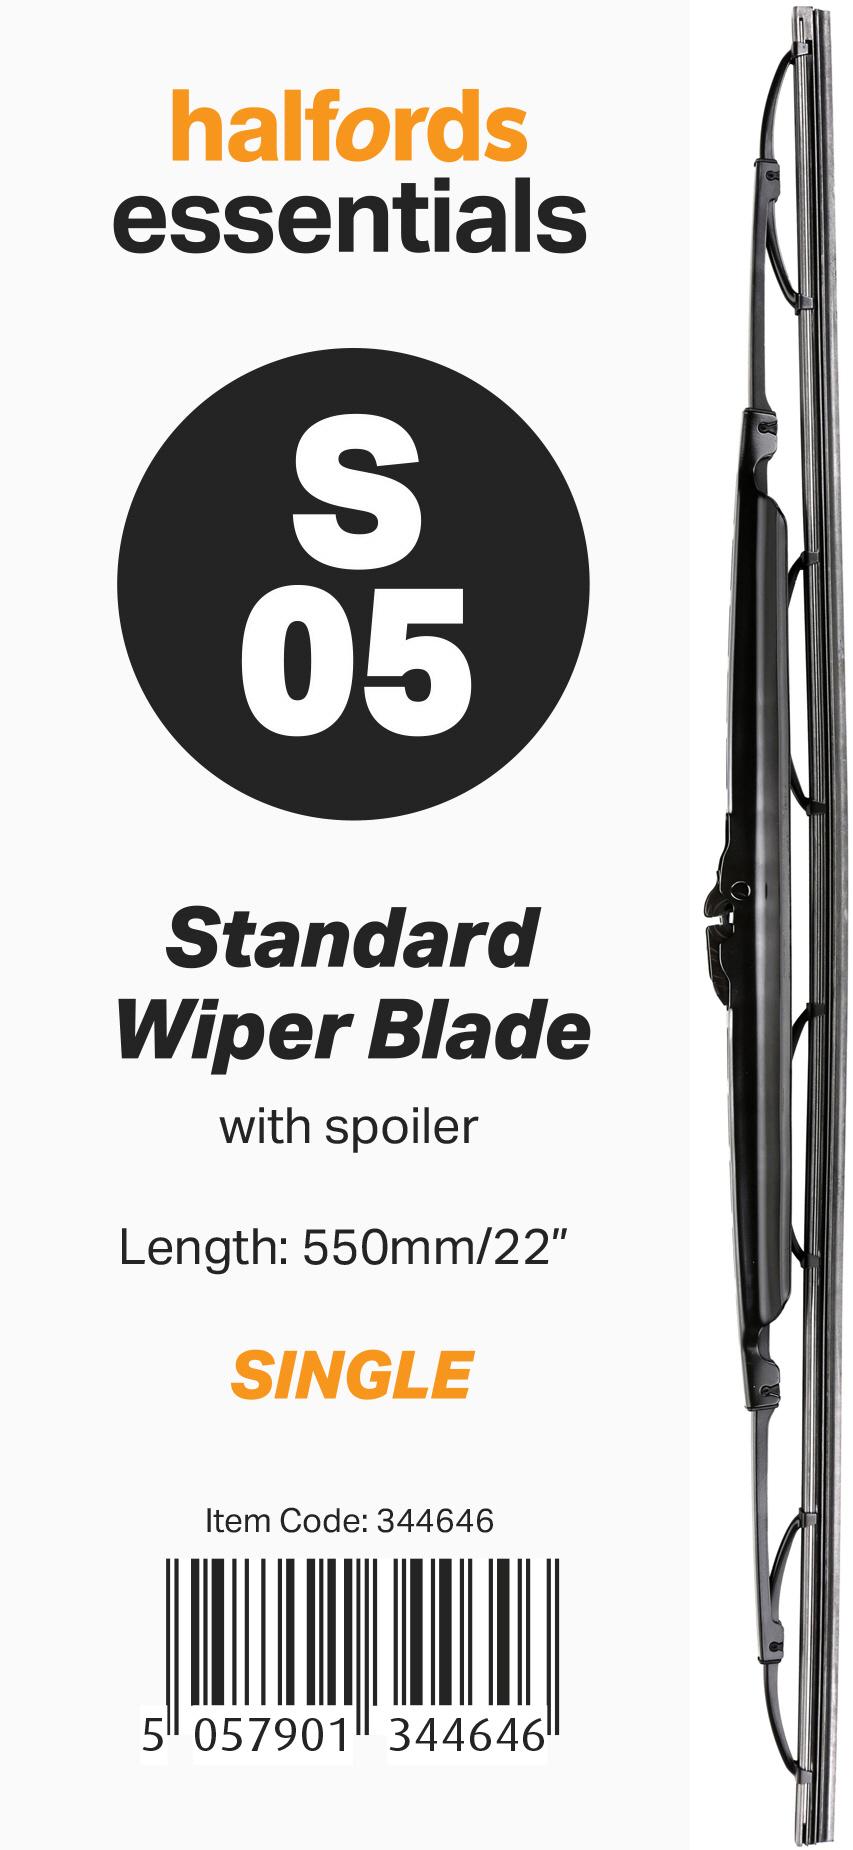 Halfords Essentials Spoiler Wiper Blade S05 - 22 Inch